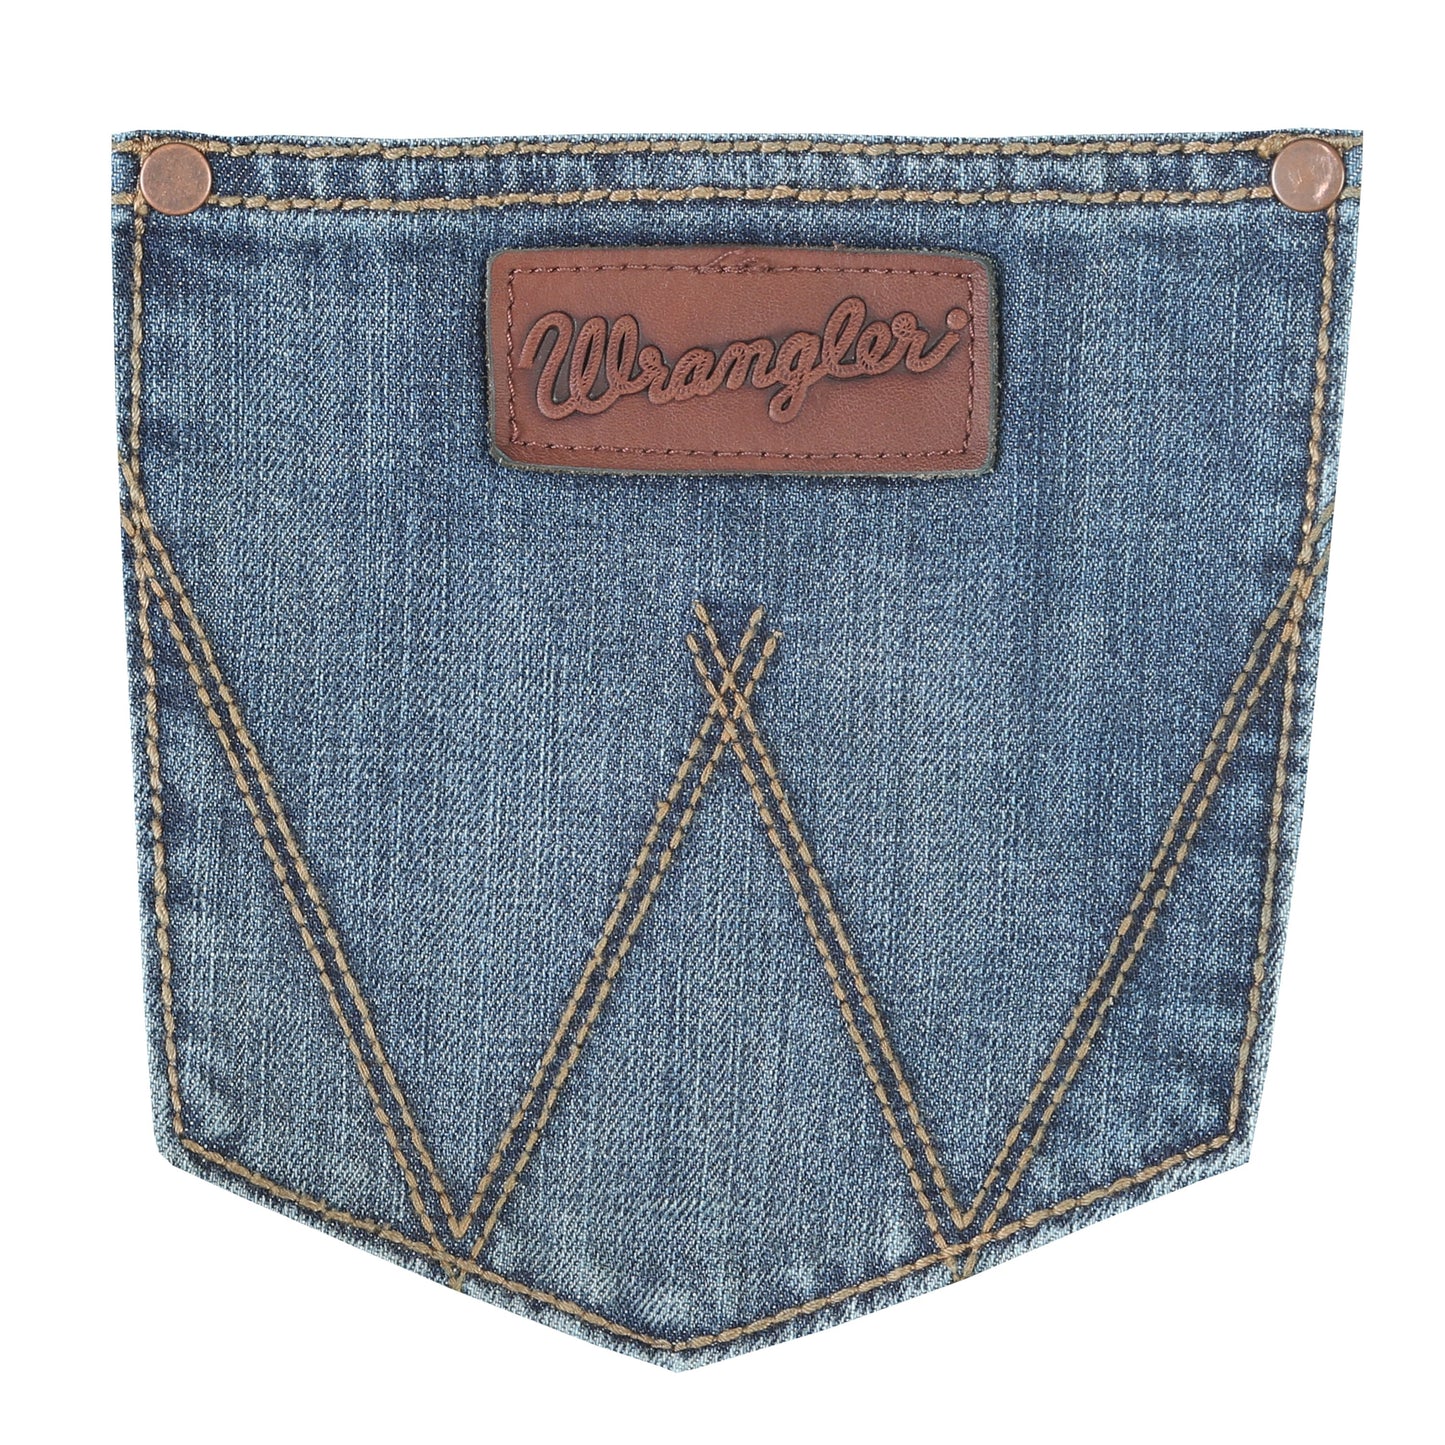 WLT88CW Wrangler Men's Retro® Limited Edition Slim Straight Jean